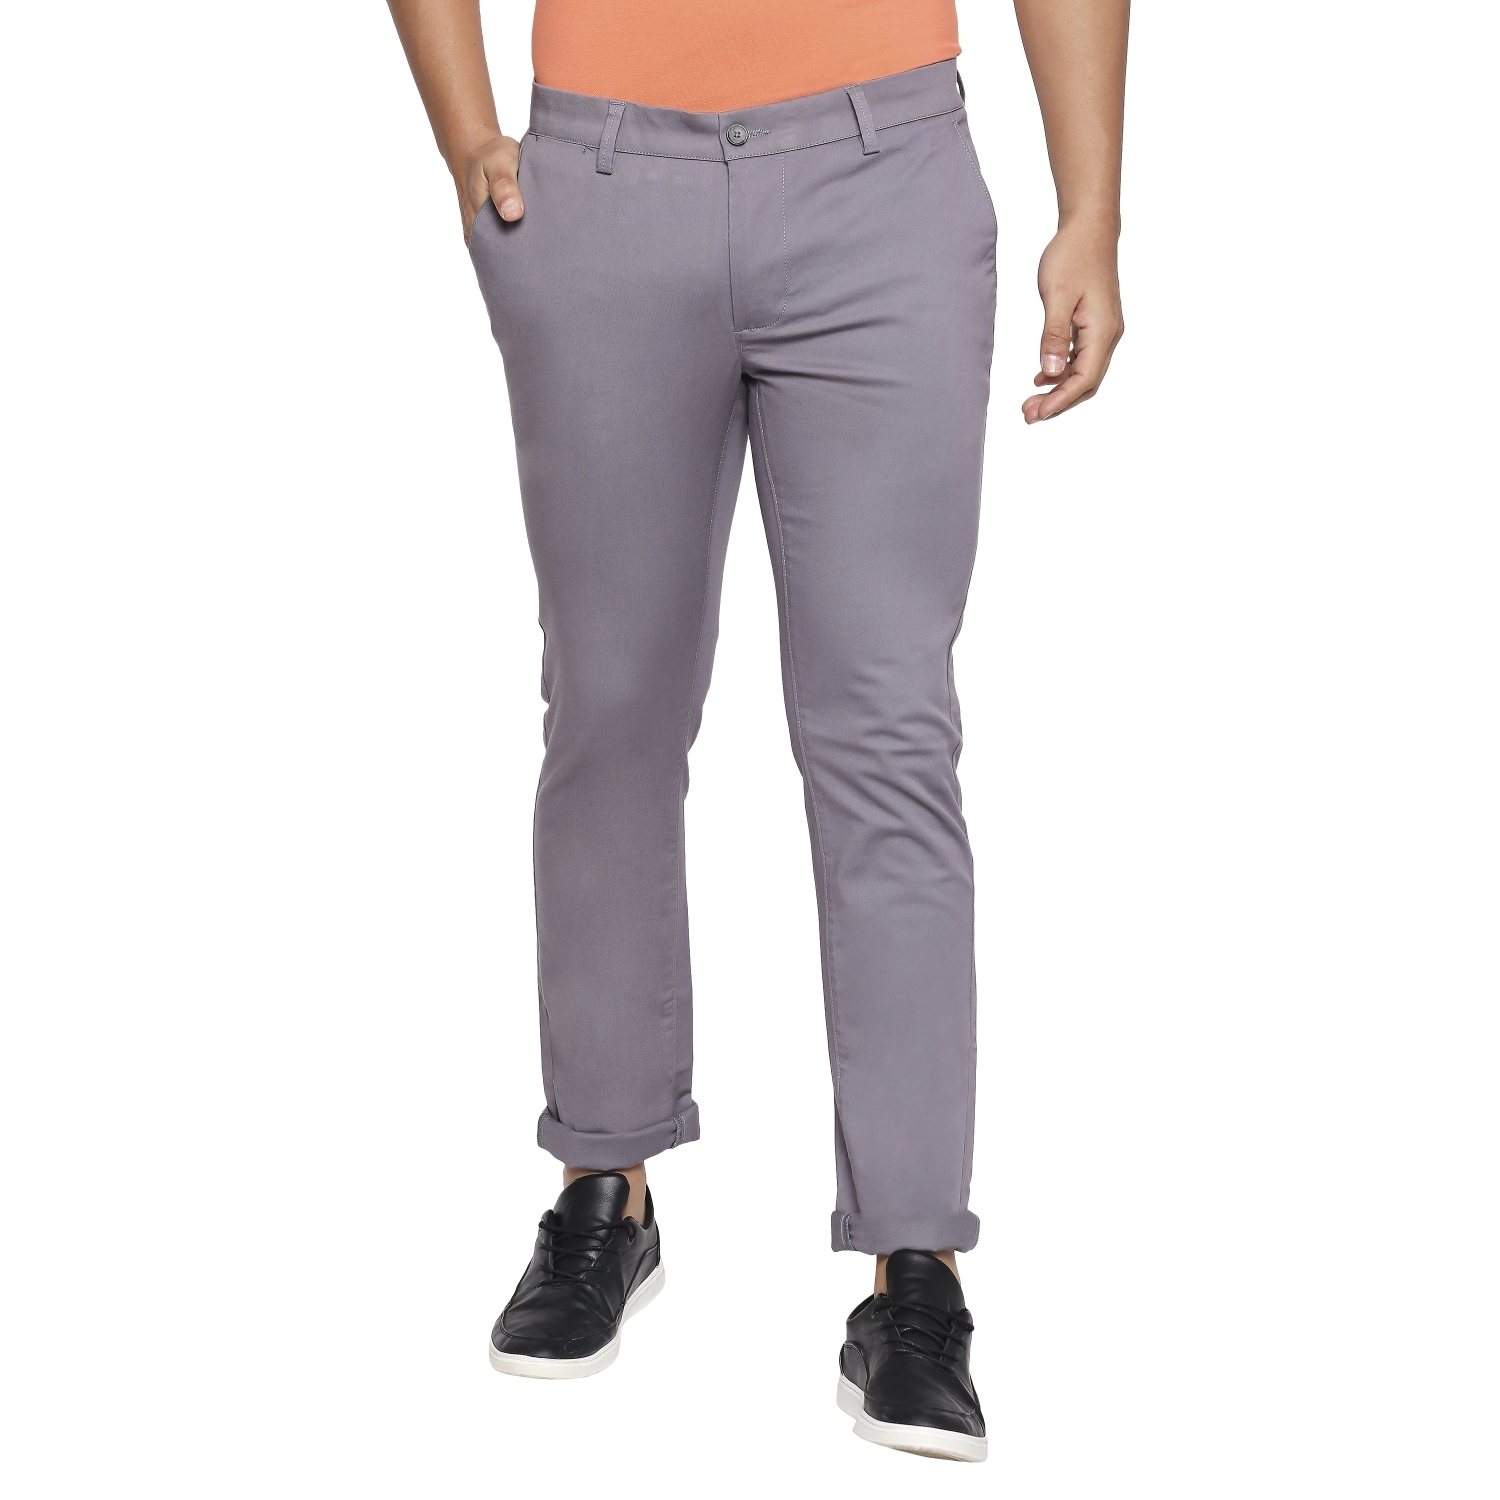 Basics | Basics Tapered Fit Street Grey Stretch Trouser